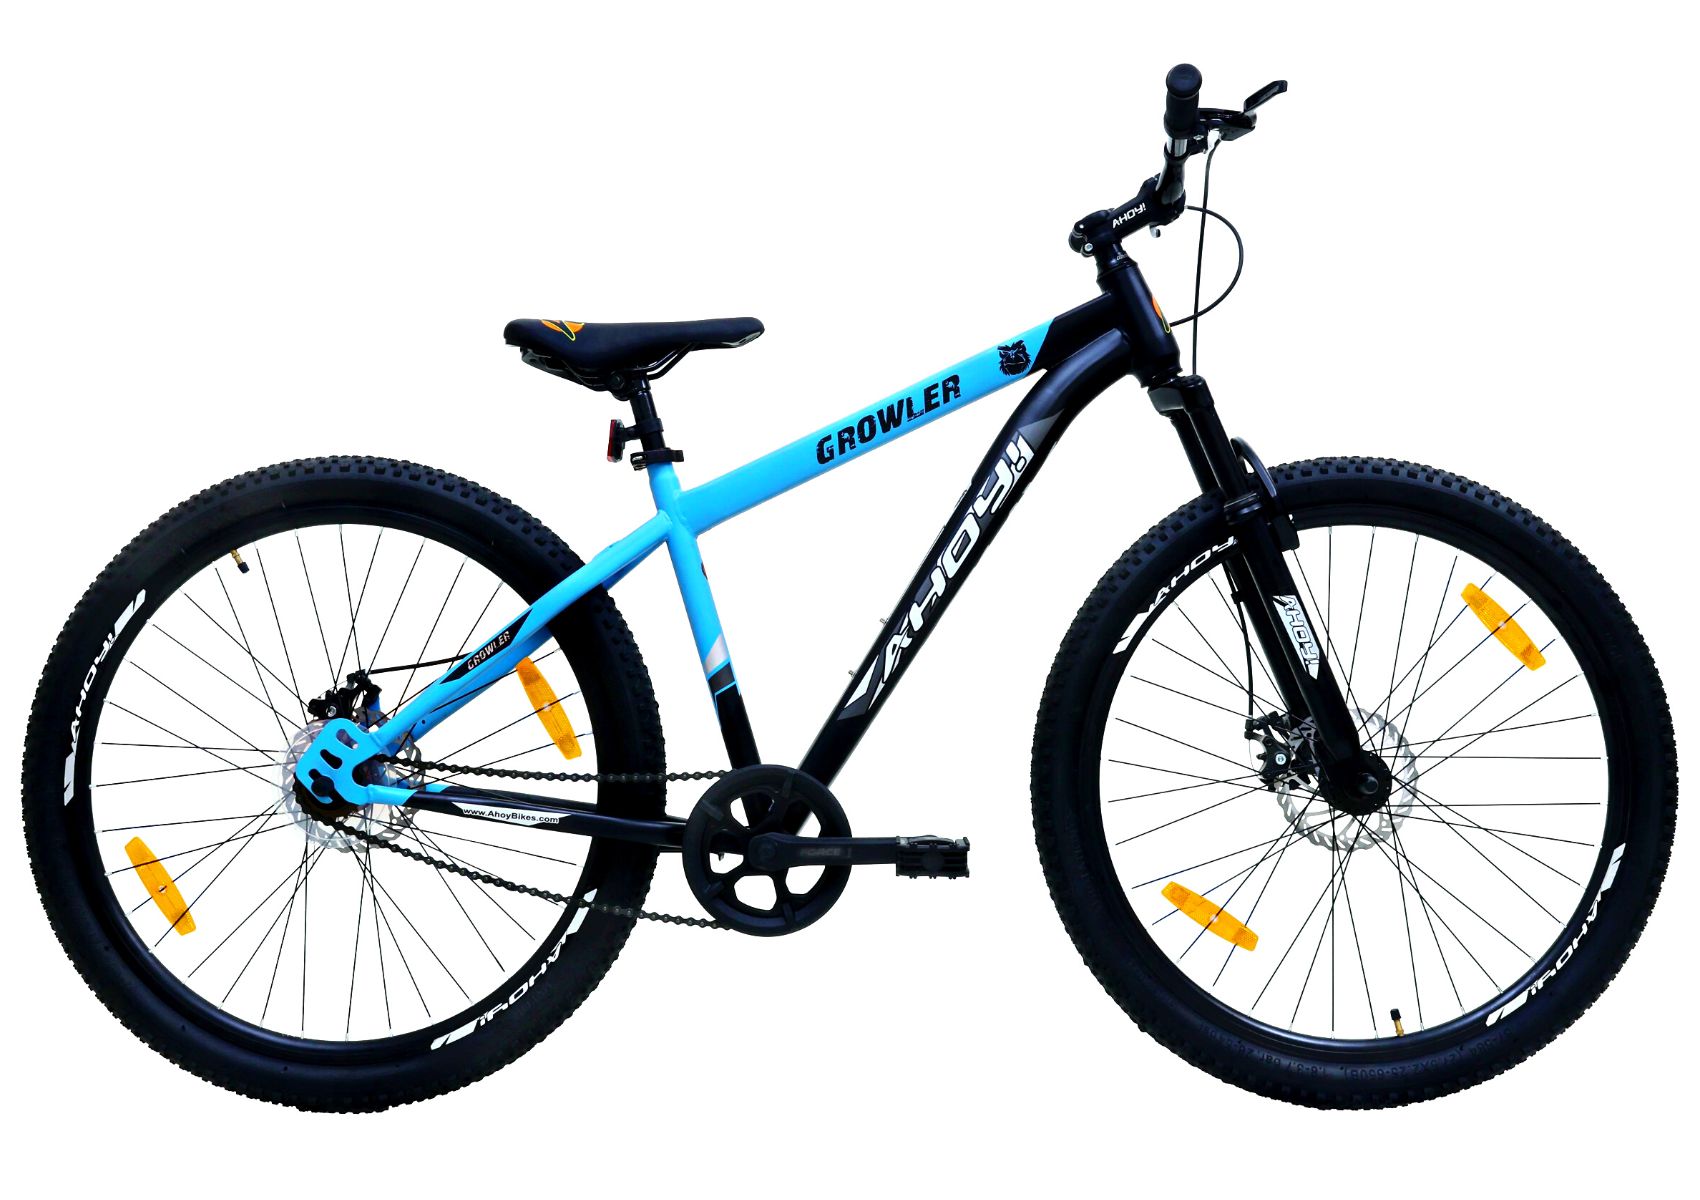 Growler Non Gear Cycle 29T | Buy Blue All Terrain Bike for Men